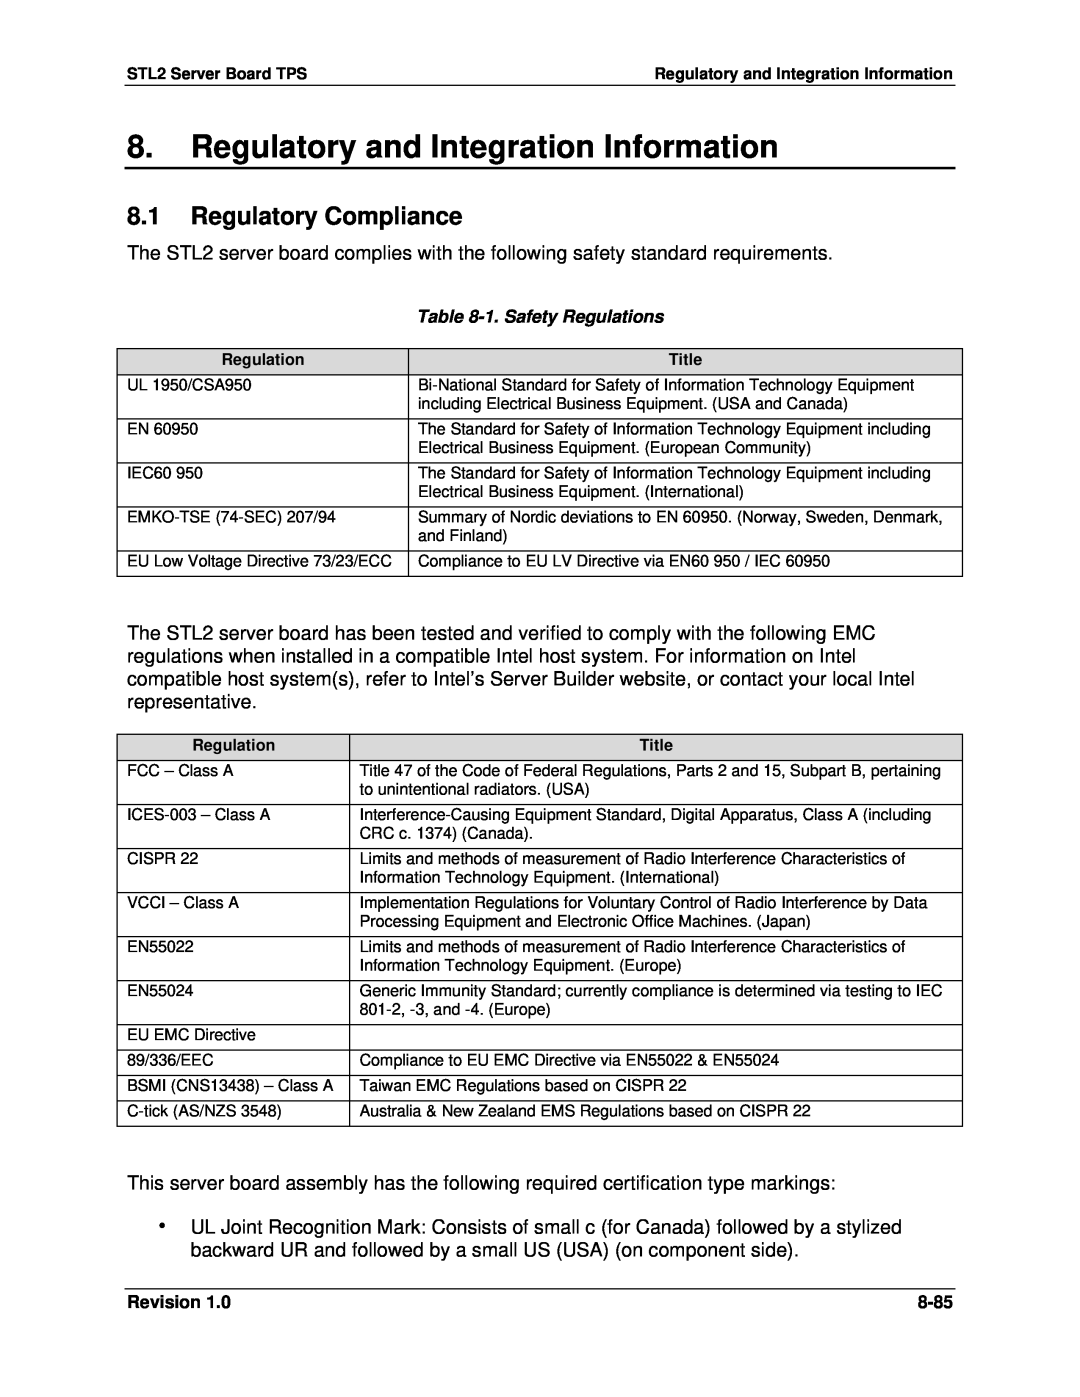 Intel STL2 manual Regulatory and Integration Information, 8.1Regulatory Compliance 